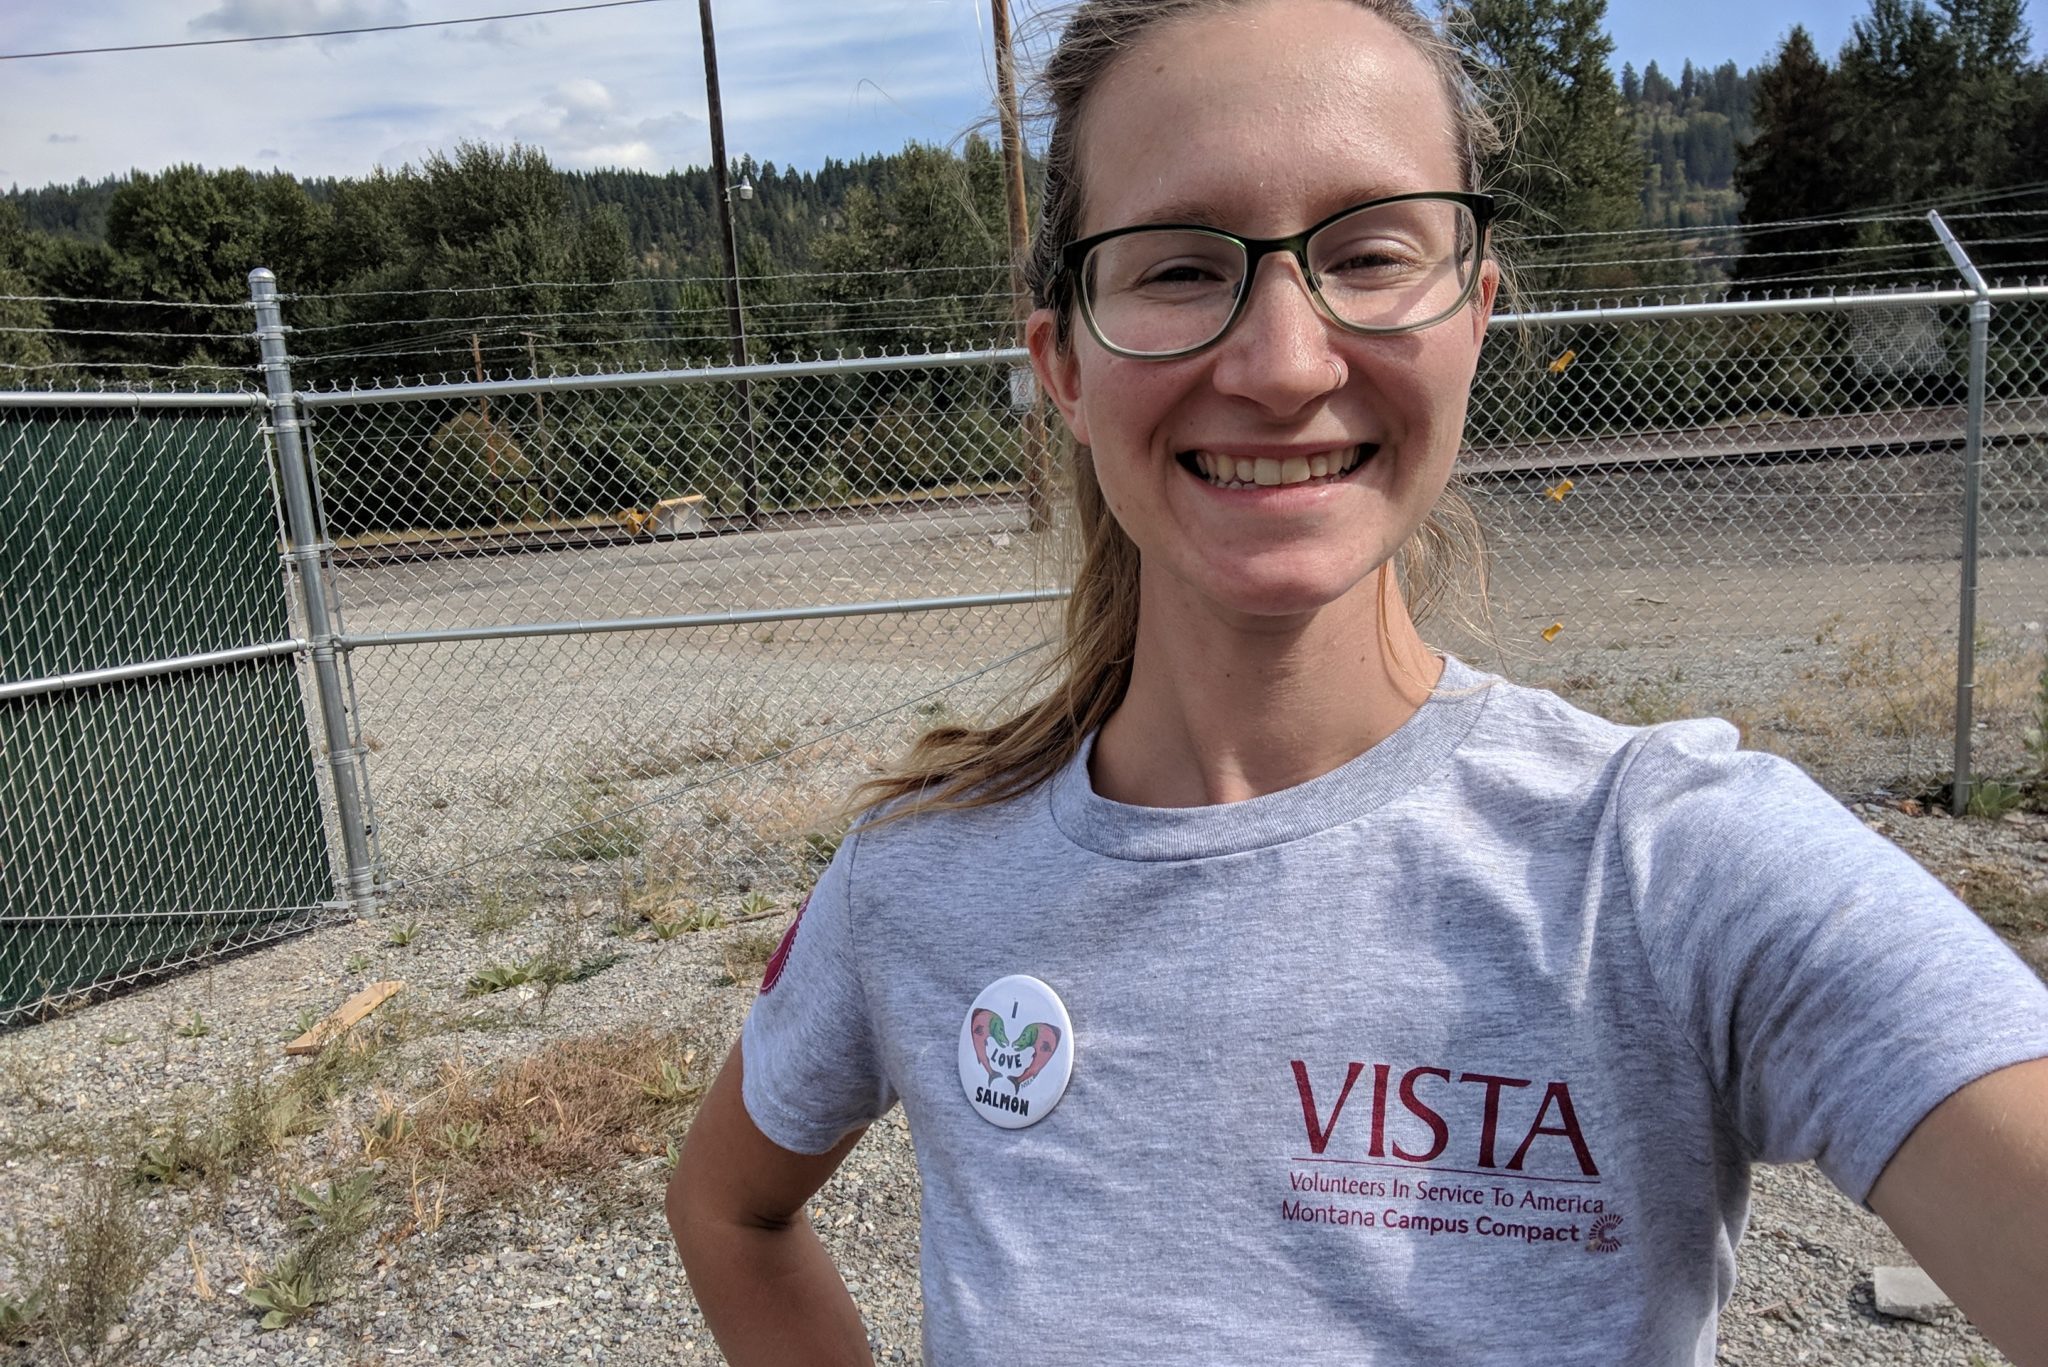 a woman smiling wearing a VISTA shirt